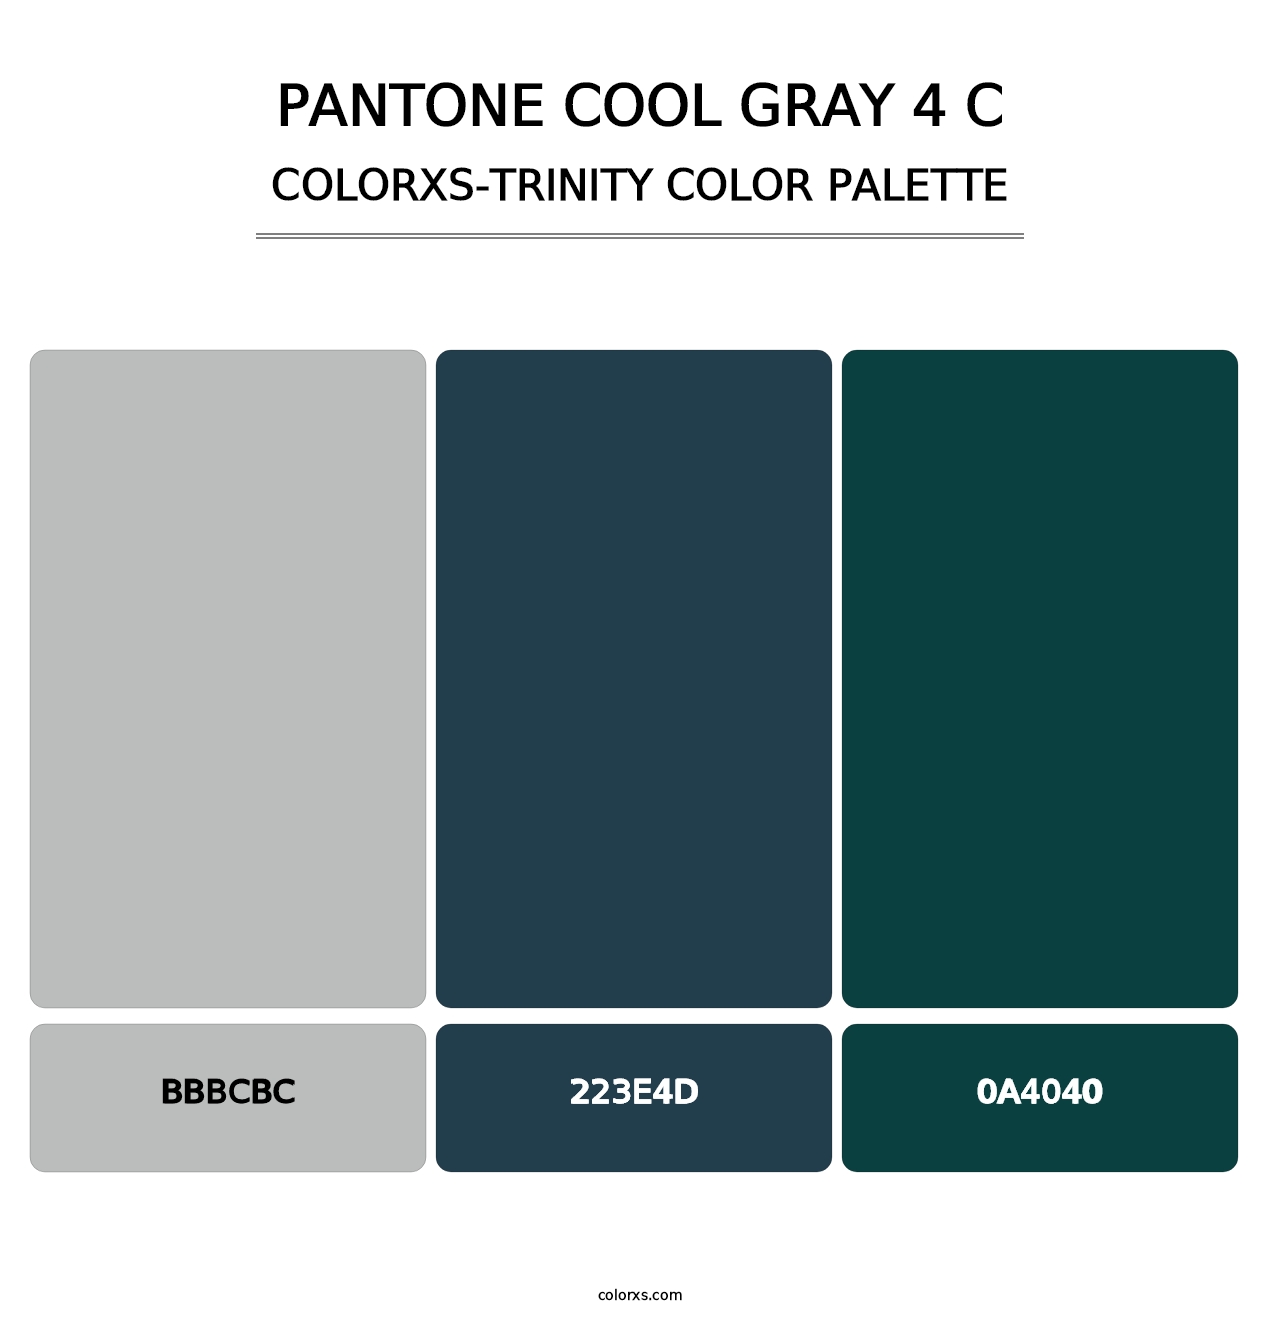 PANTONE Cool Gray 4 C - Colorxs Trinity Palette